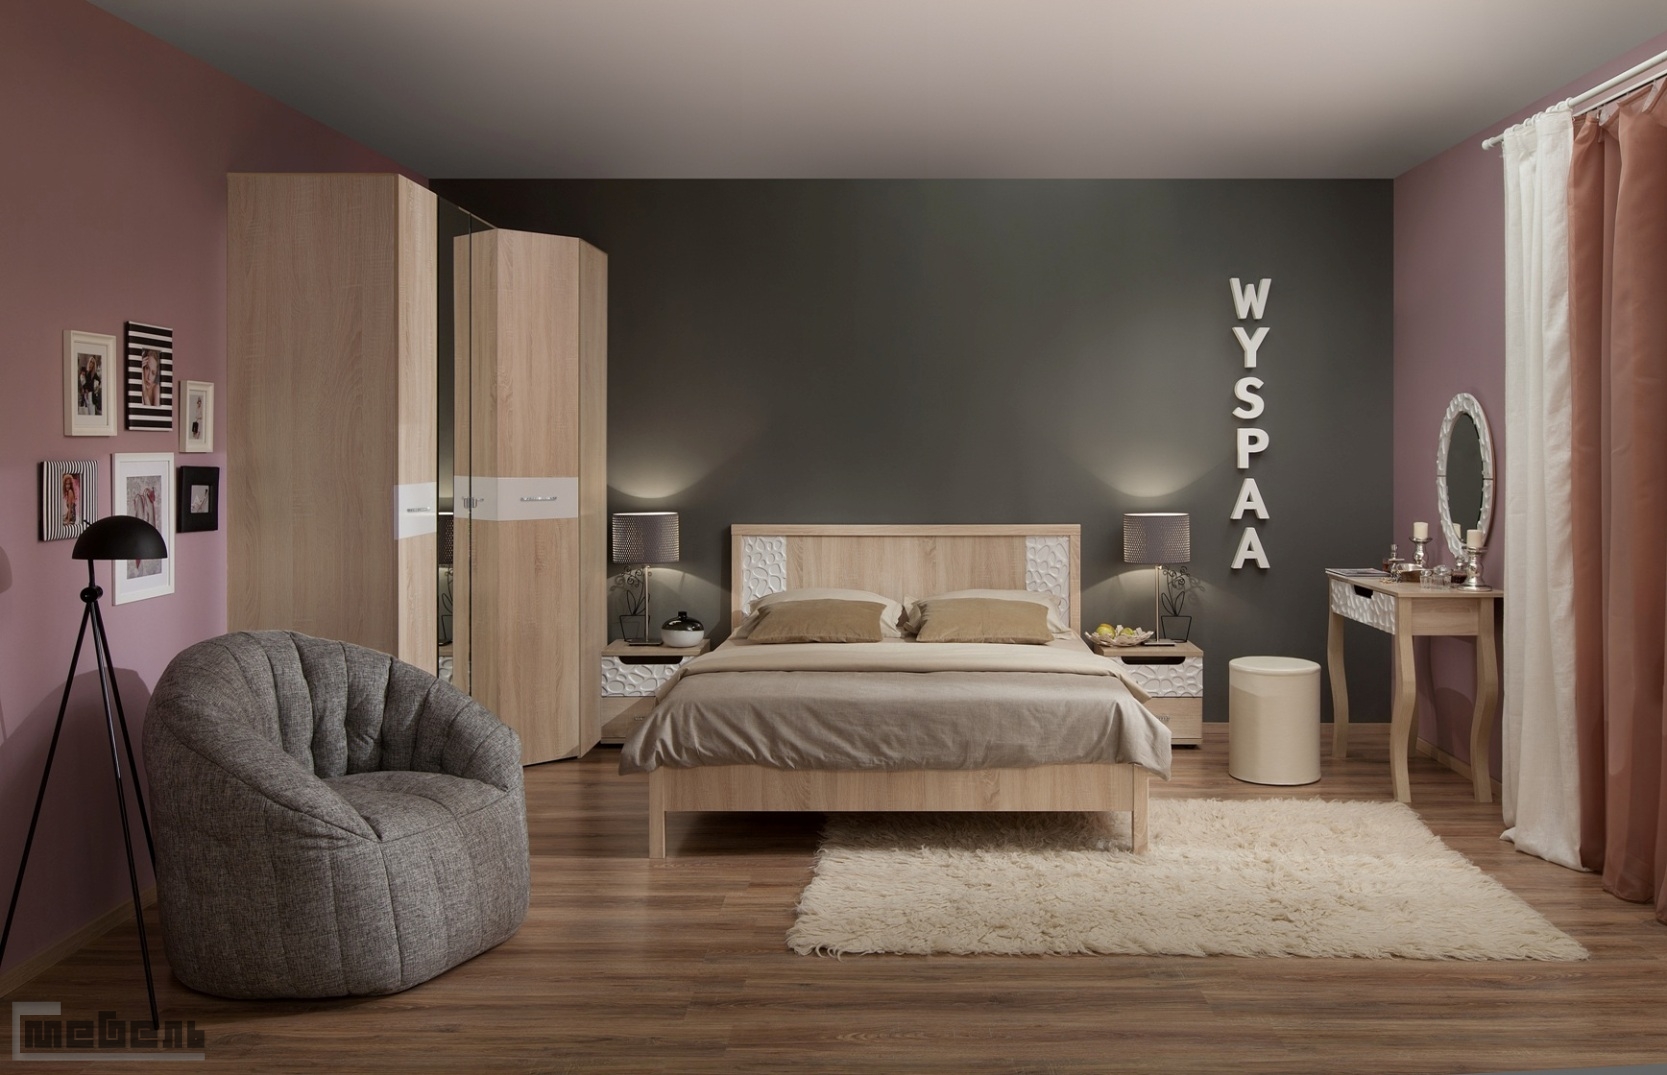 Спальня "WYSPAA" (модульная) - Комплектация № 2